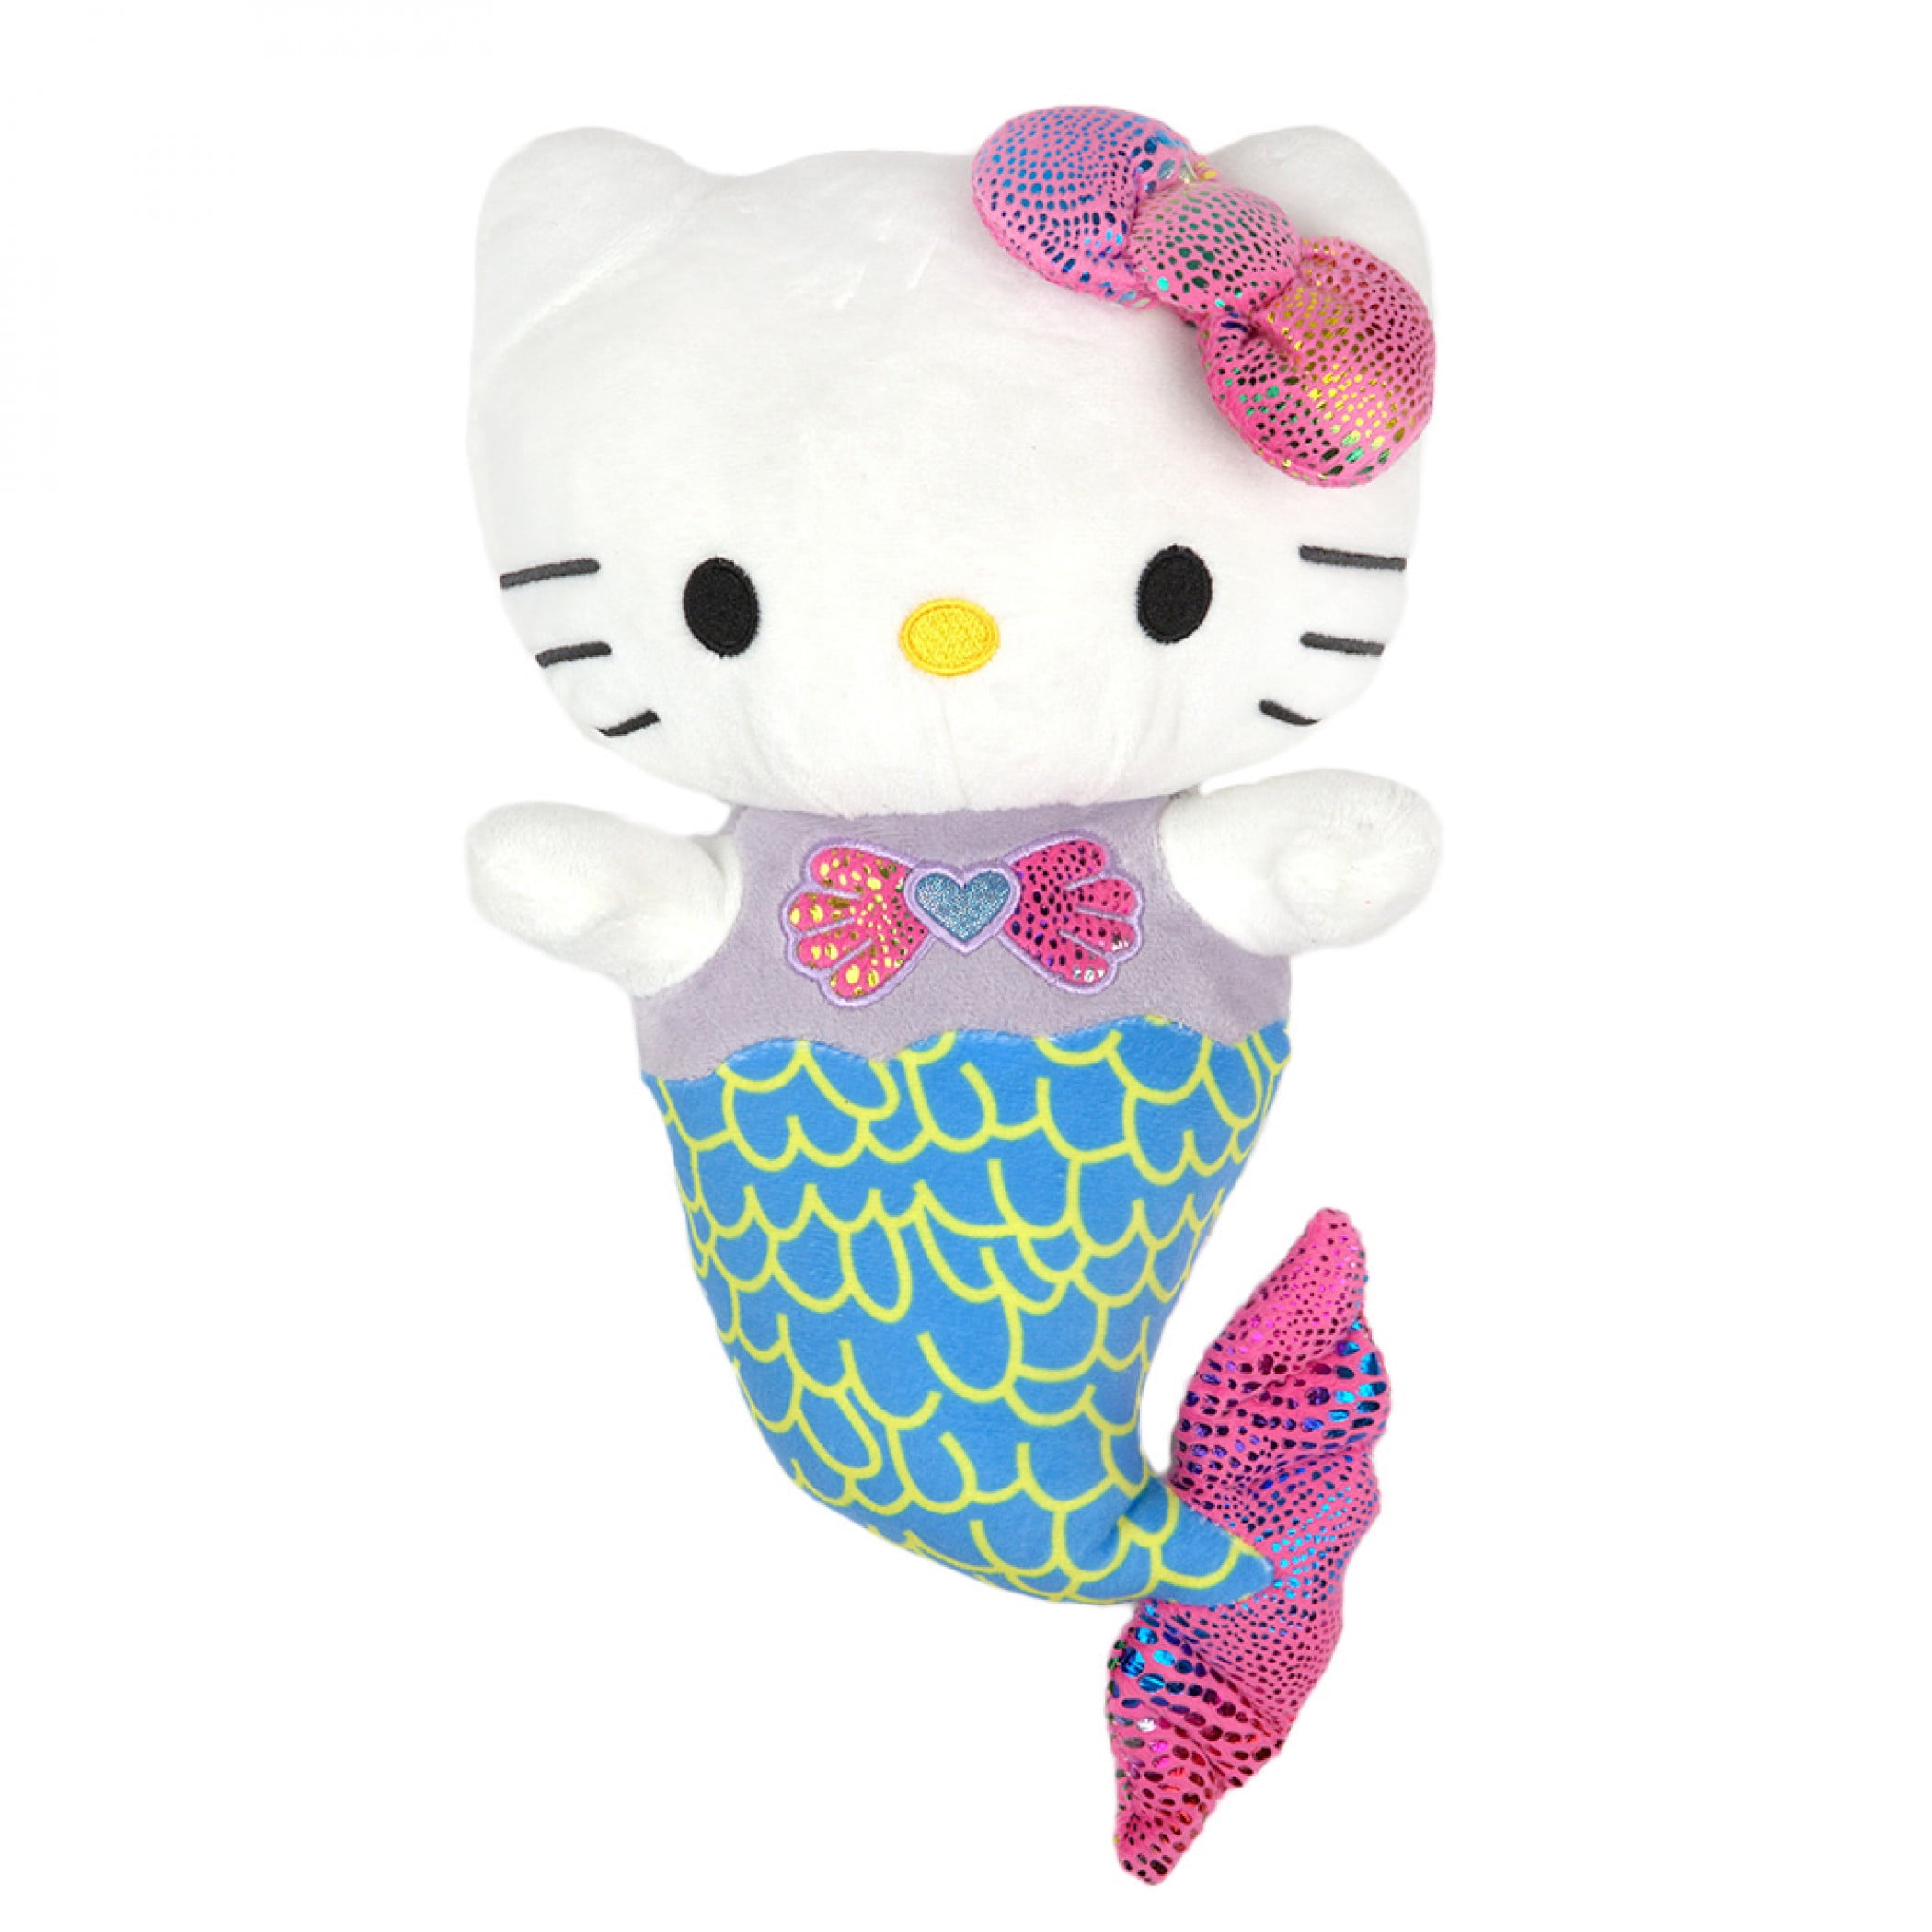 12" Sanrio Hello Kitty Mermaid  Plush Toy Doll Stuffed Animal 